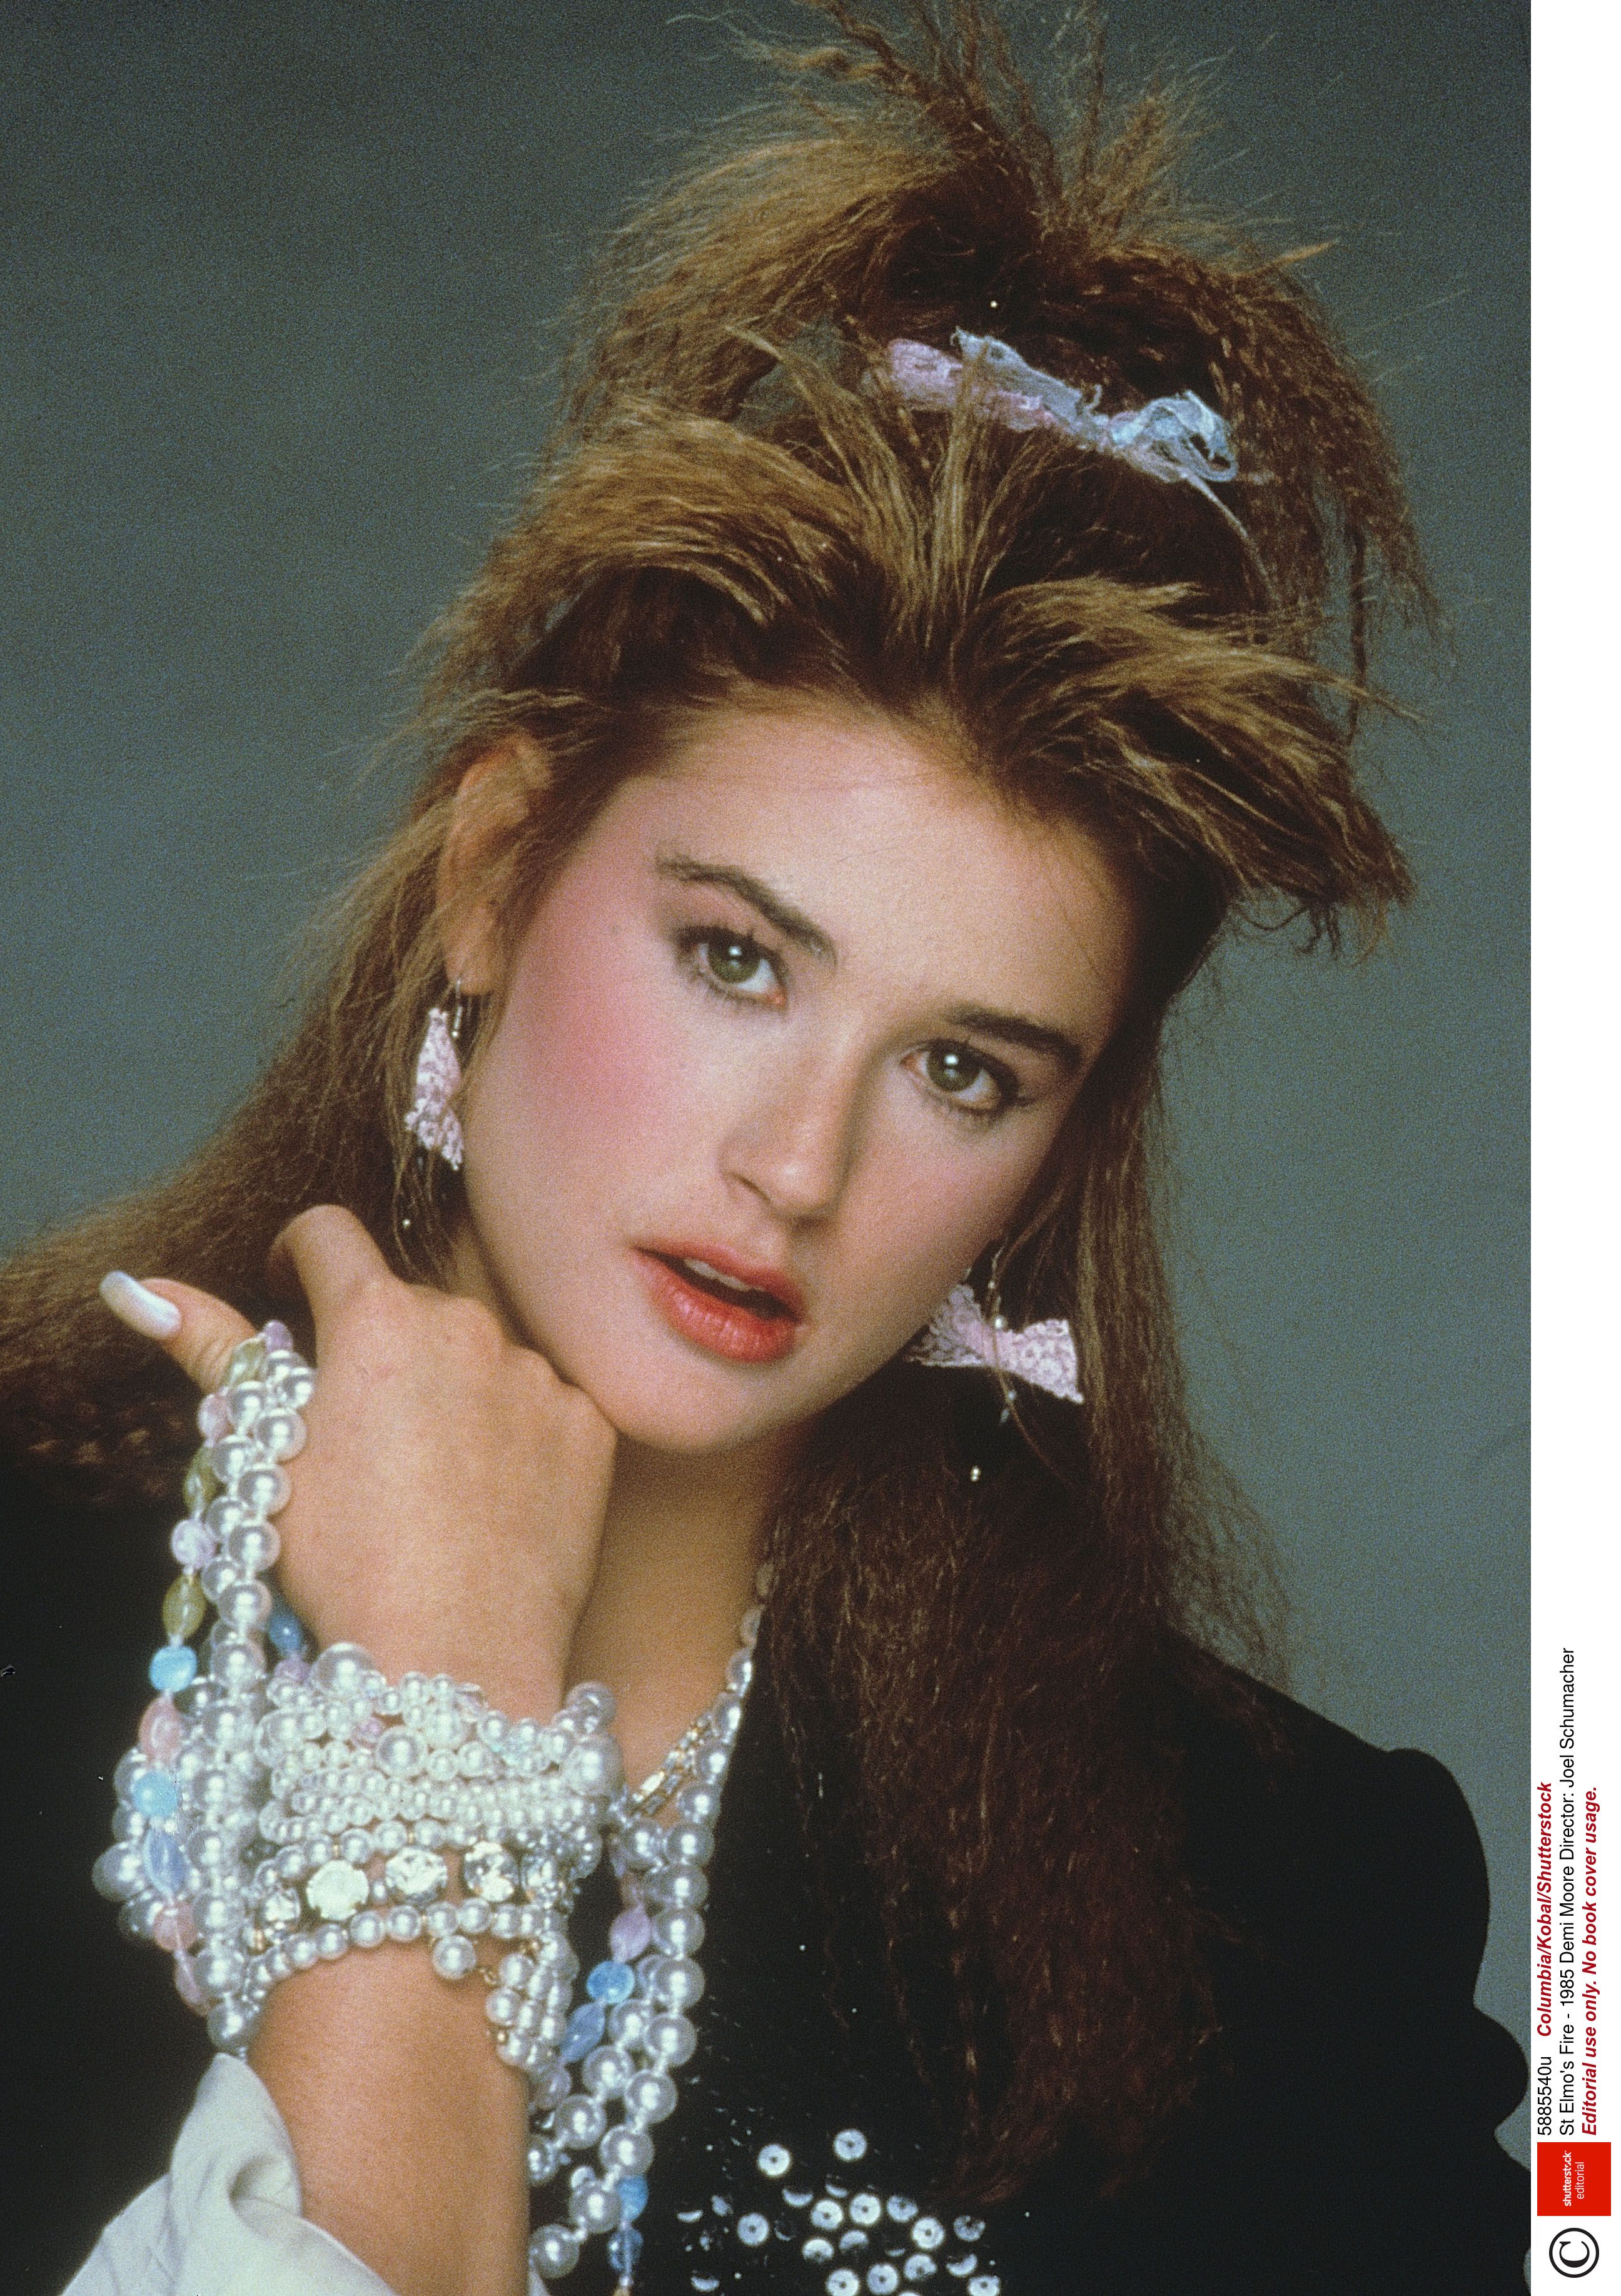 Mid-late '80s female fashion : r/80s